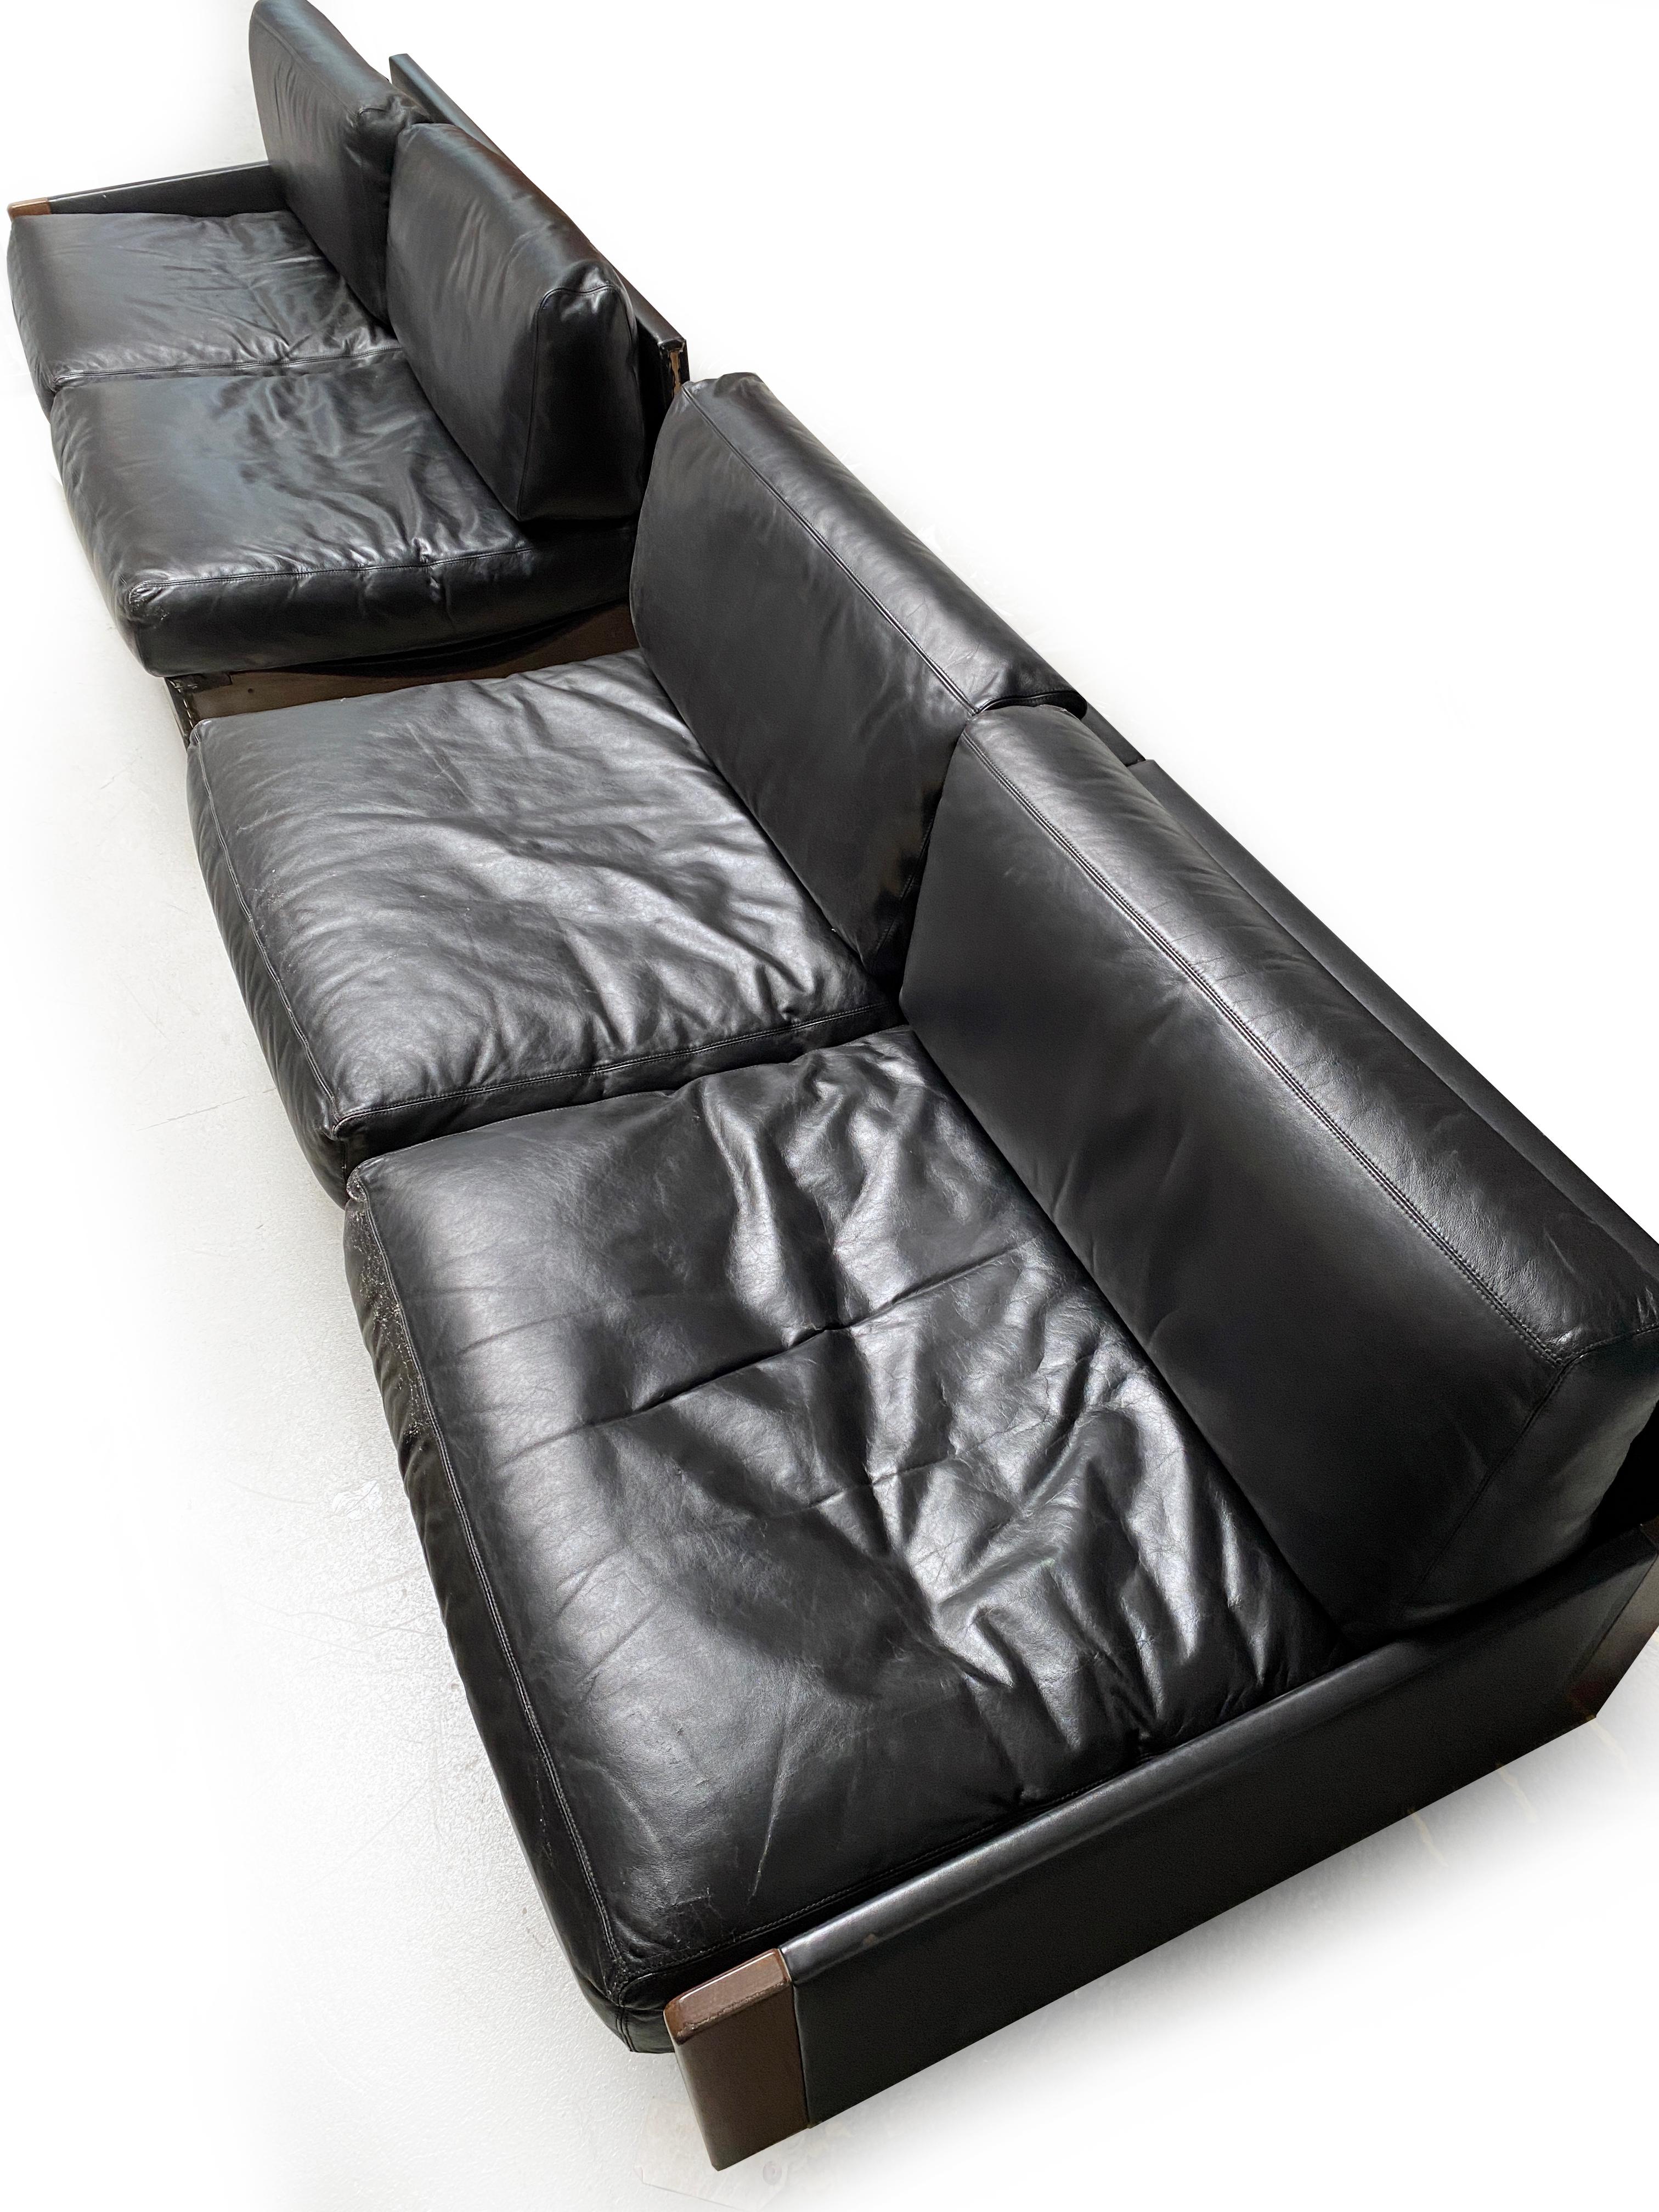 Afra & Tobia Scarpa Black Leather 4-Seat Sofa for Cassina Model-920, 1970s 1